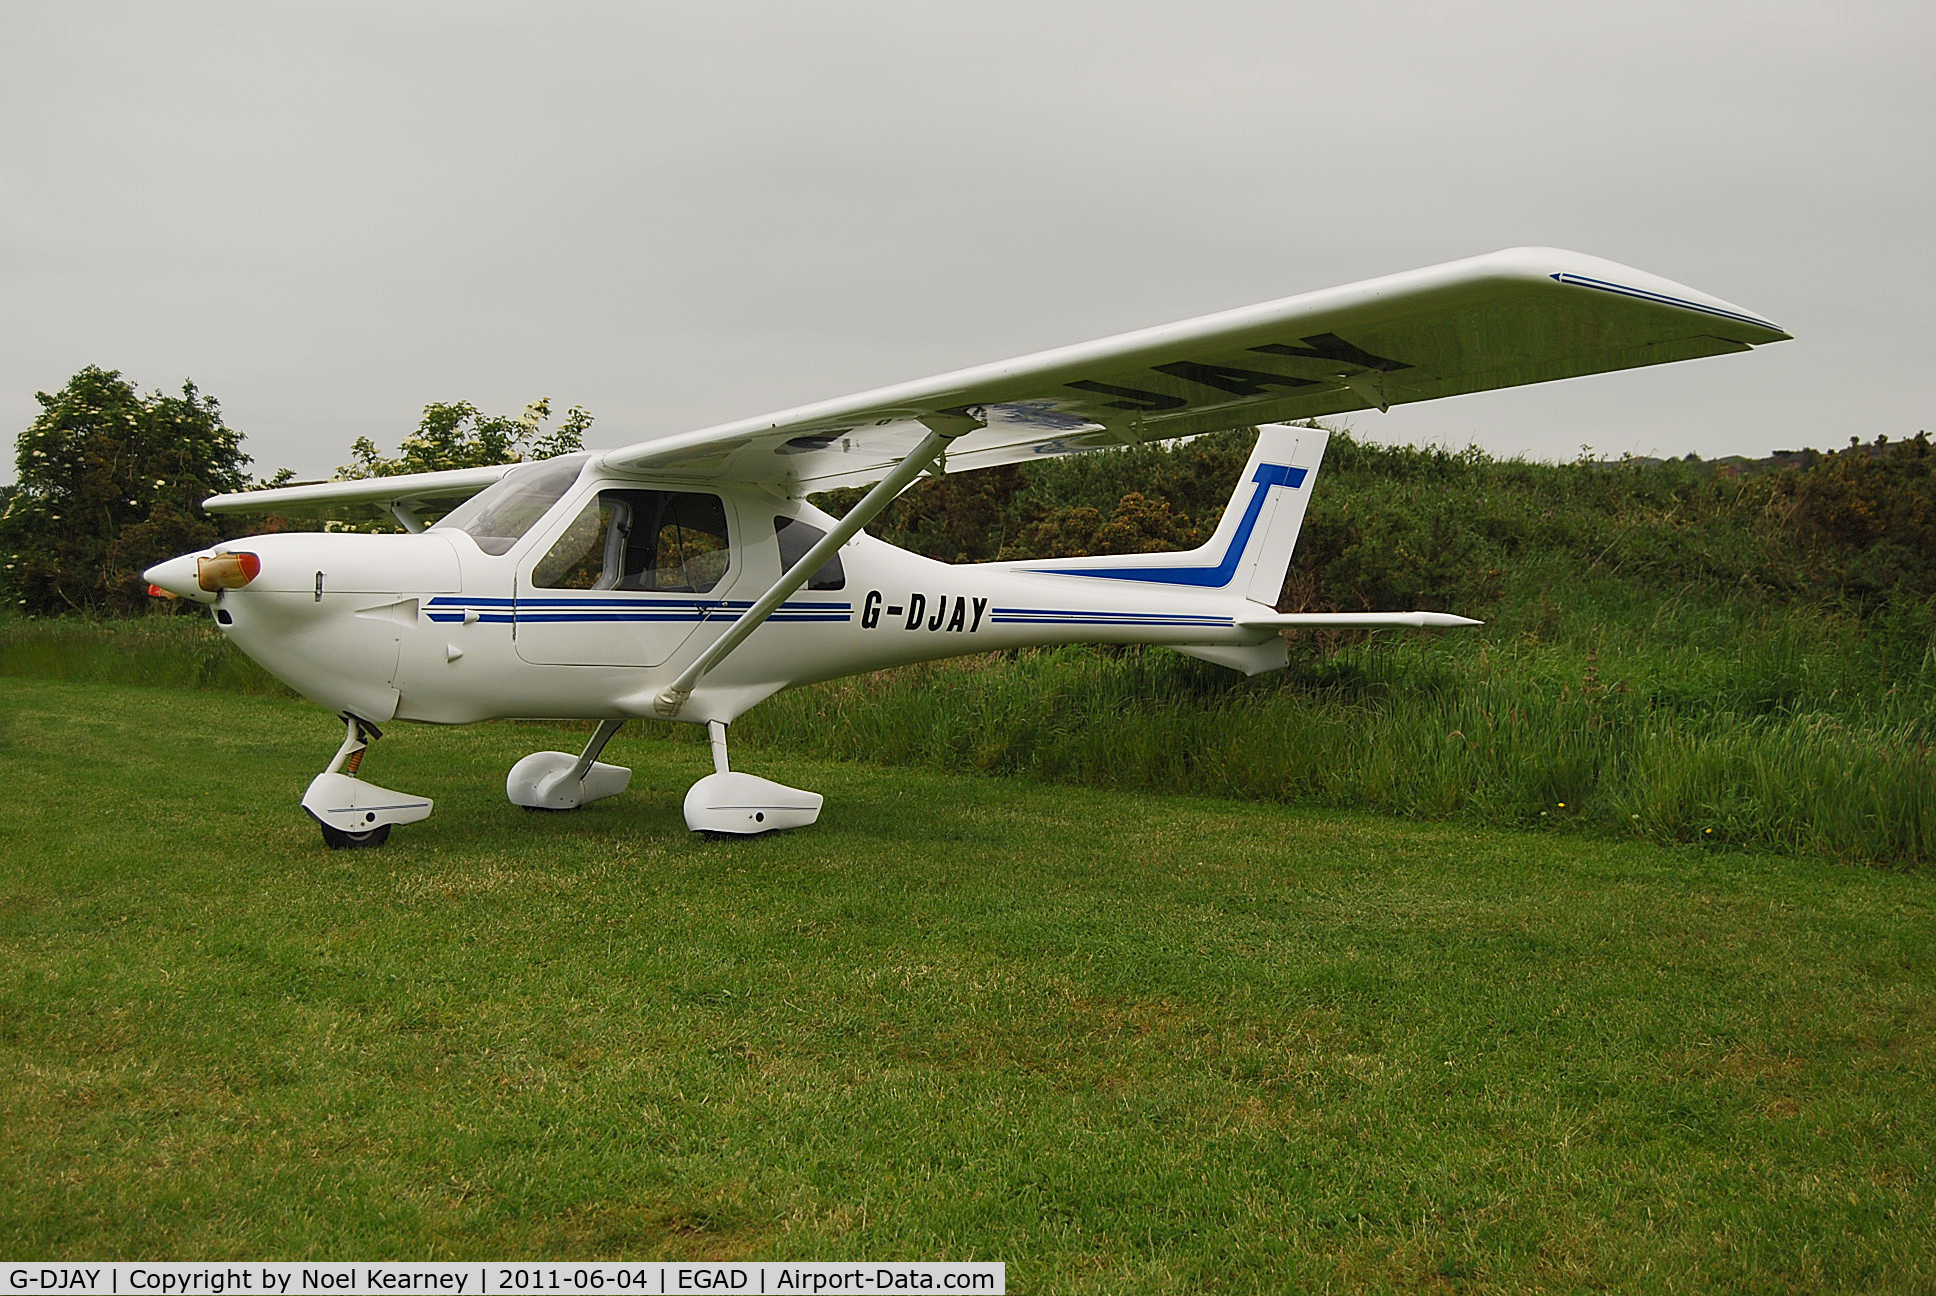 G-DJAY, 2001 Jabiru UL-450 C/N PFA 274A-13633, Parked in the display area at Newtownards Airfield.